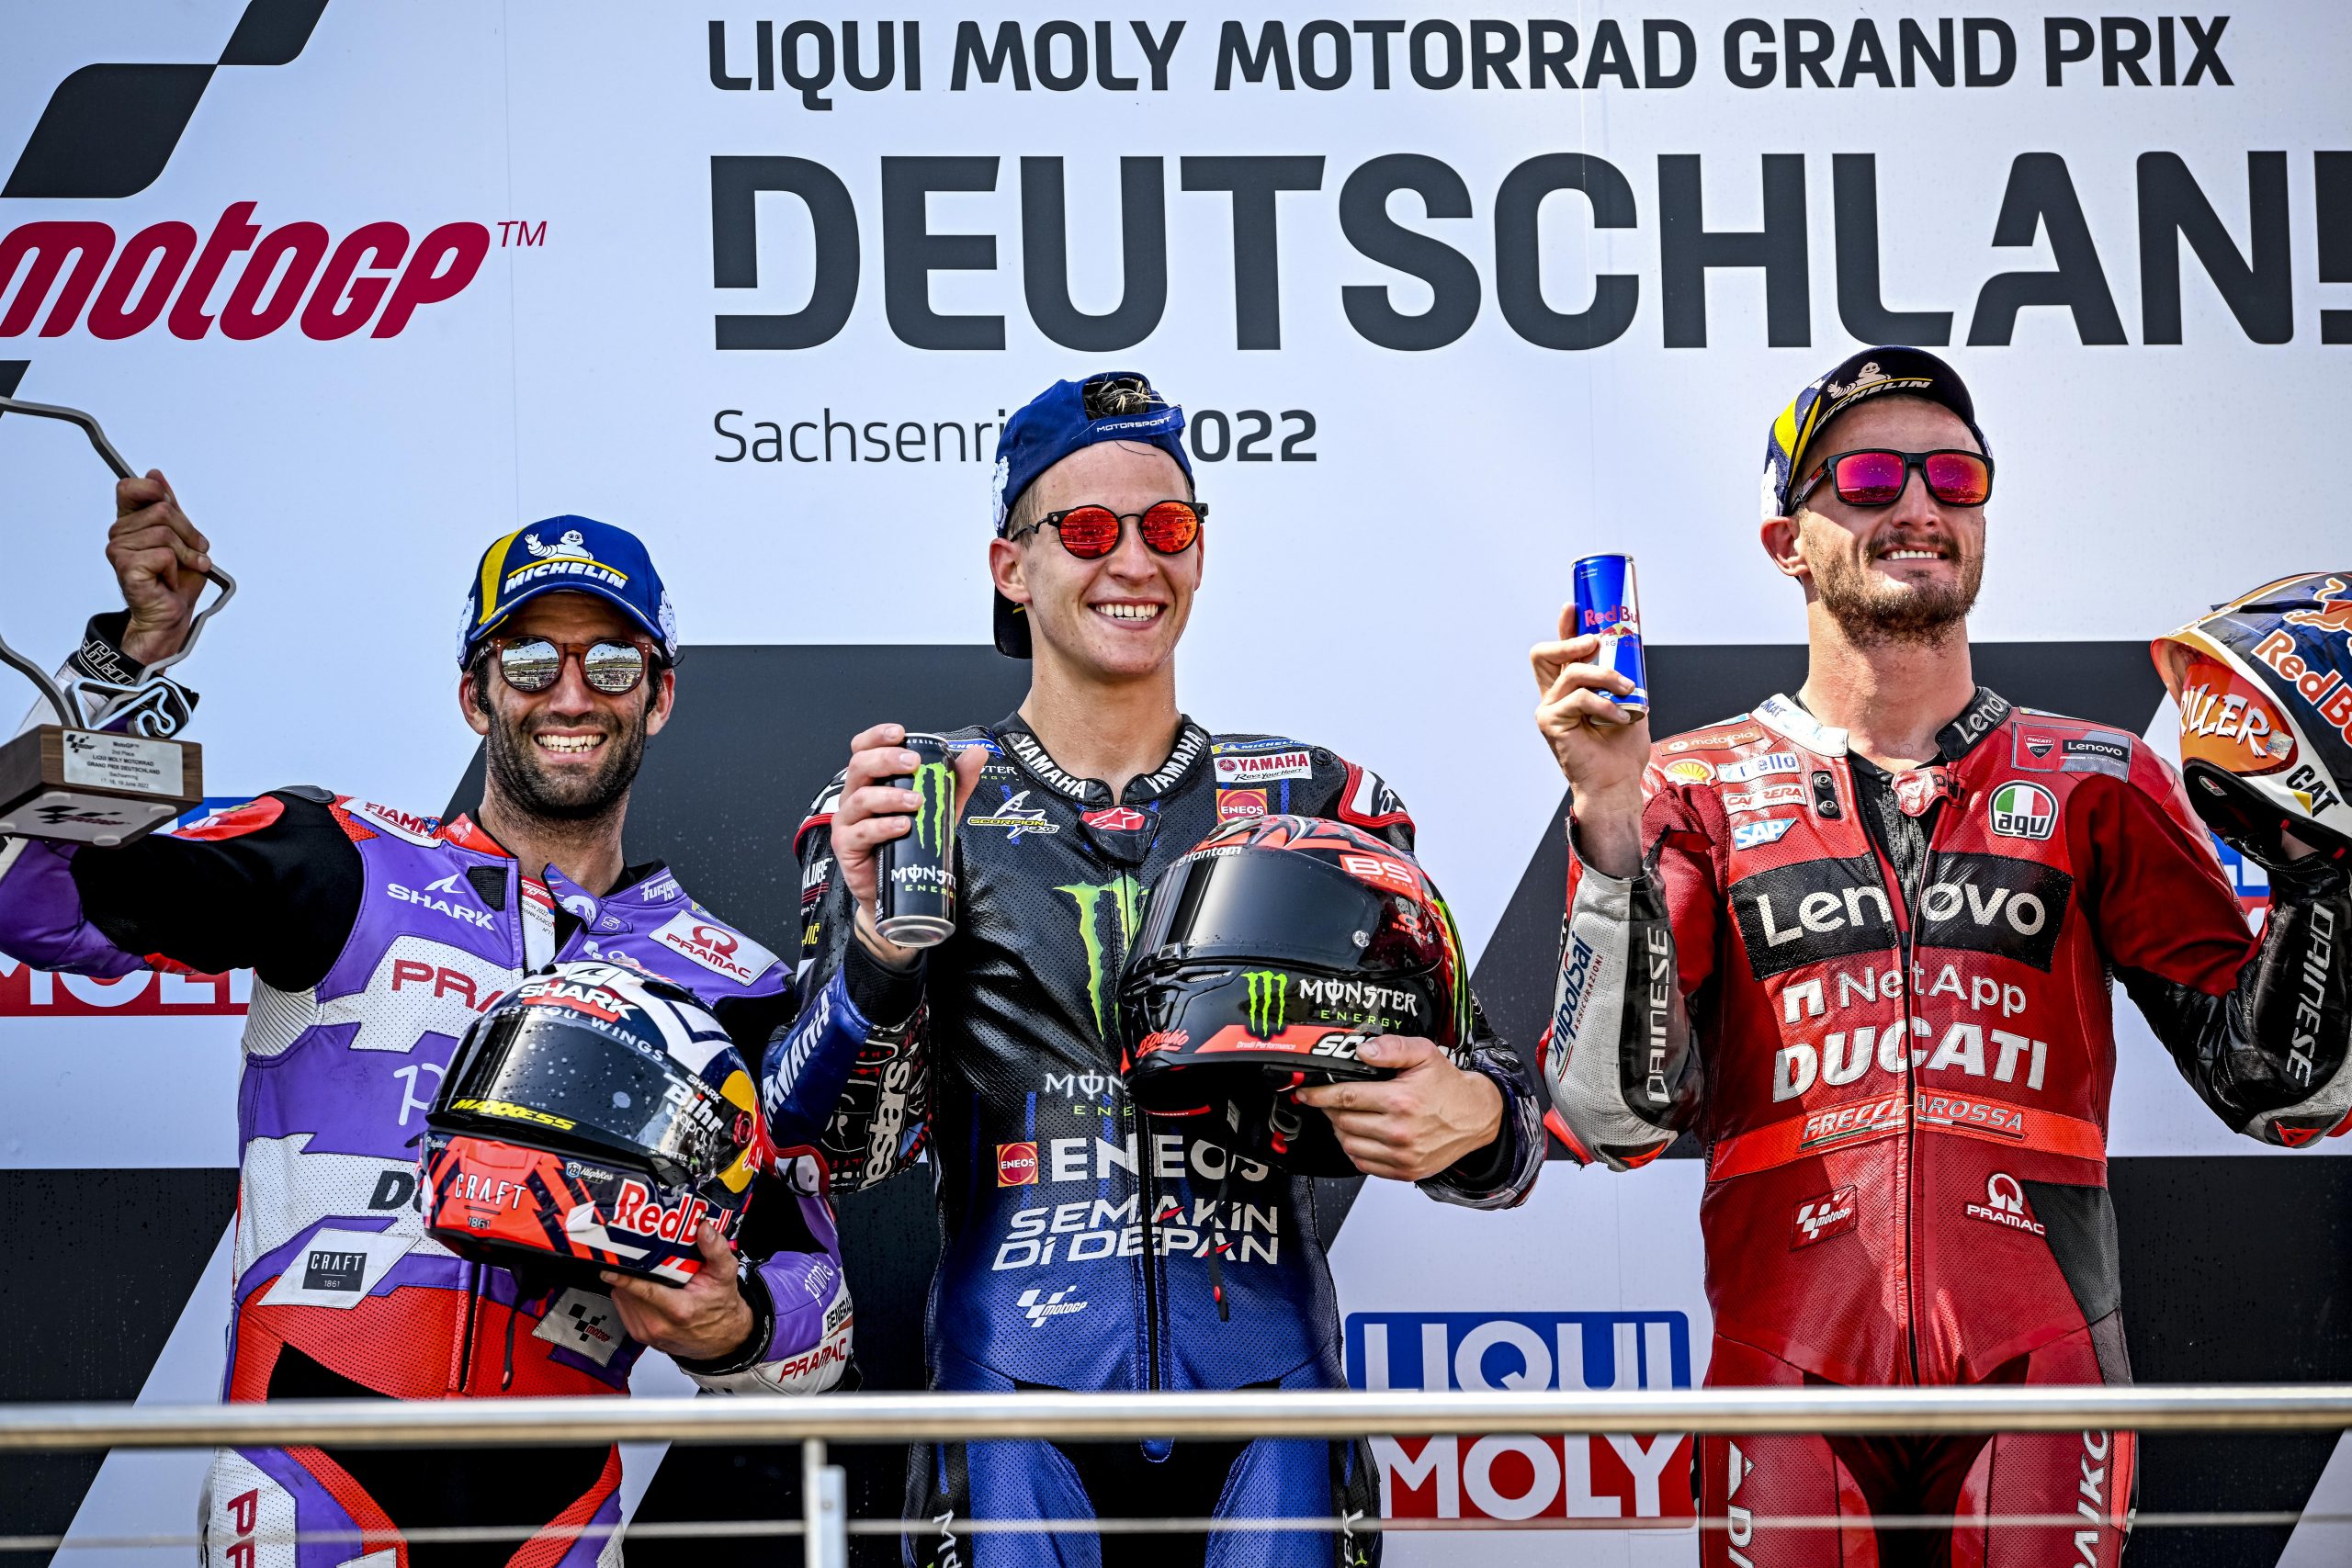 GERMANY MOTORCYCLING GRAND PRIX:Motorcycling Grand Prix of Germany